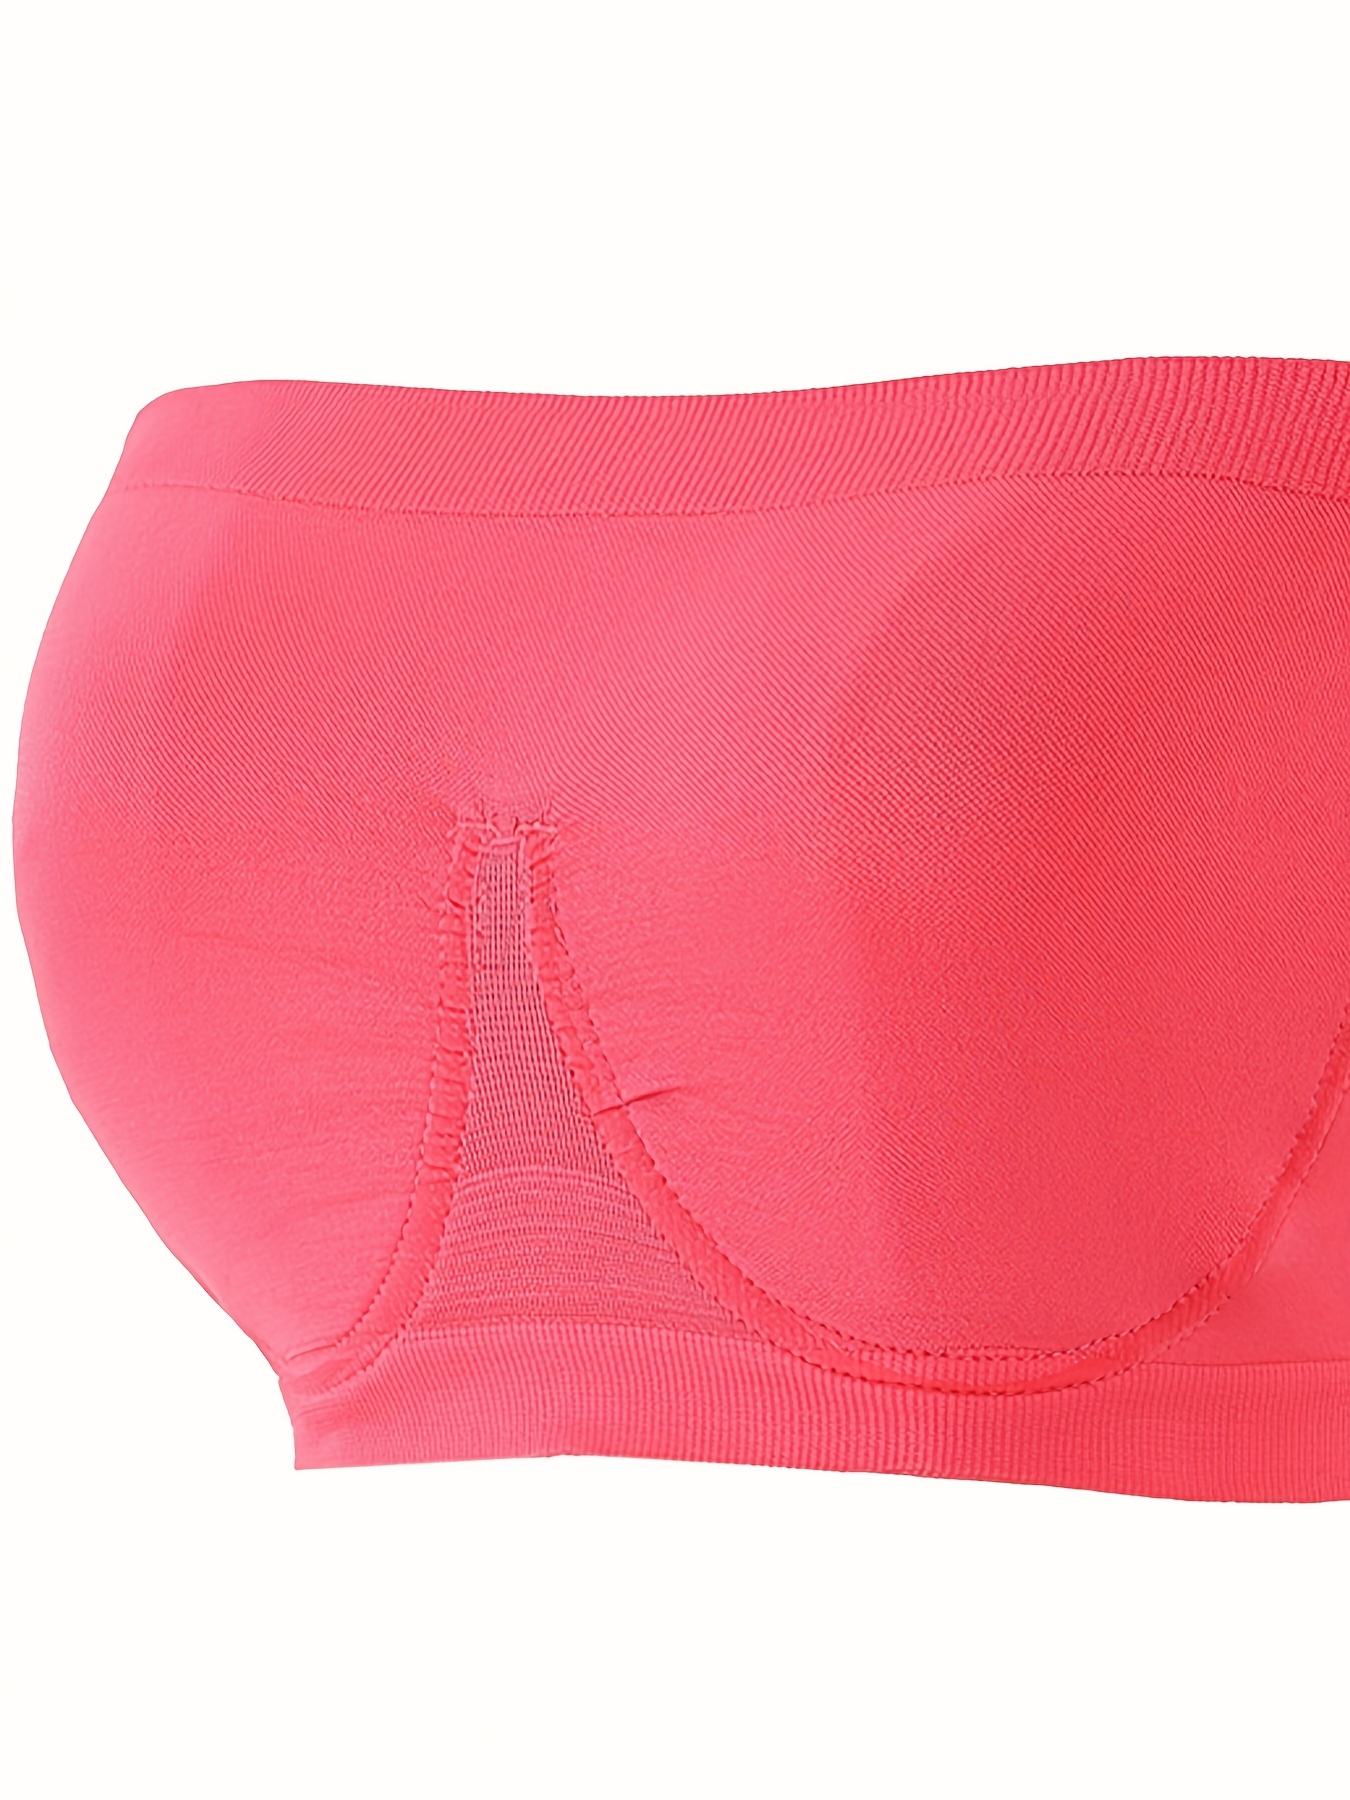 FUTURO FASHION Womens Padded Boobtube Seamless Top Strapless Bandeau Bra  Sport Underwear S-XL FG2085 White - ShopStyle